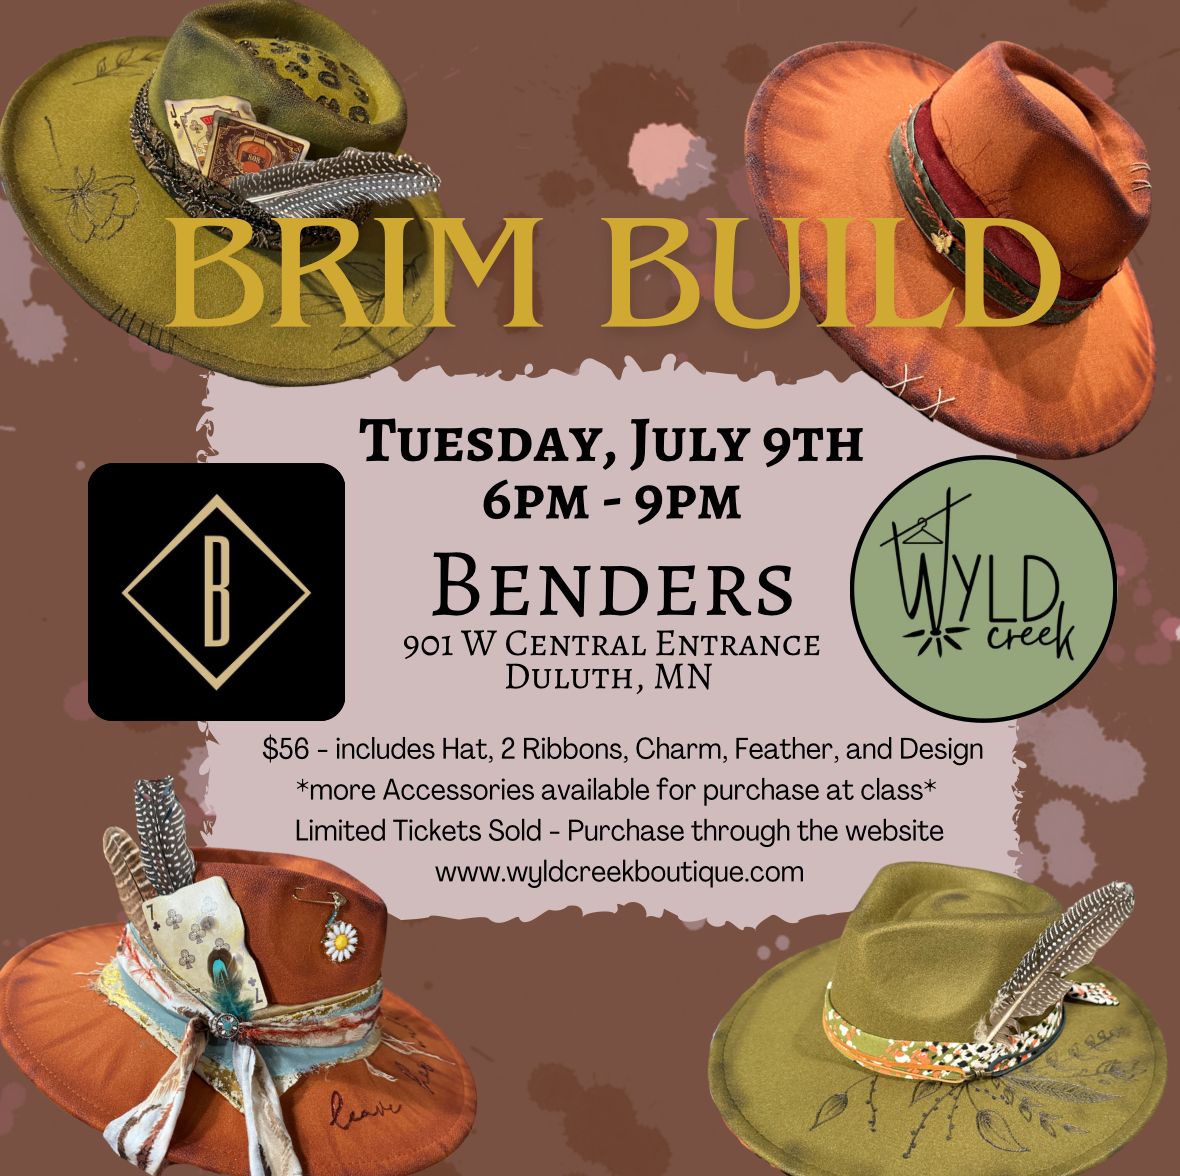 July 9th - Brim Build @ Benders, Duluth